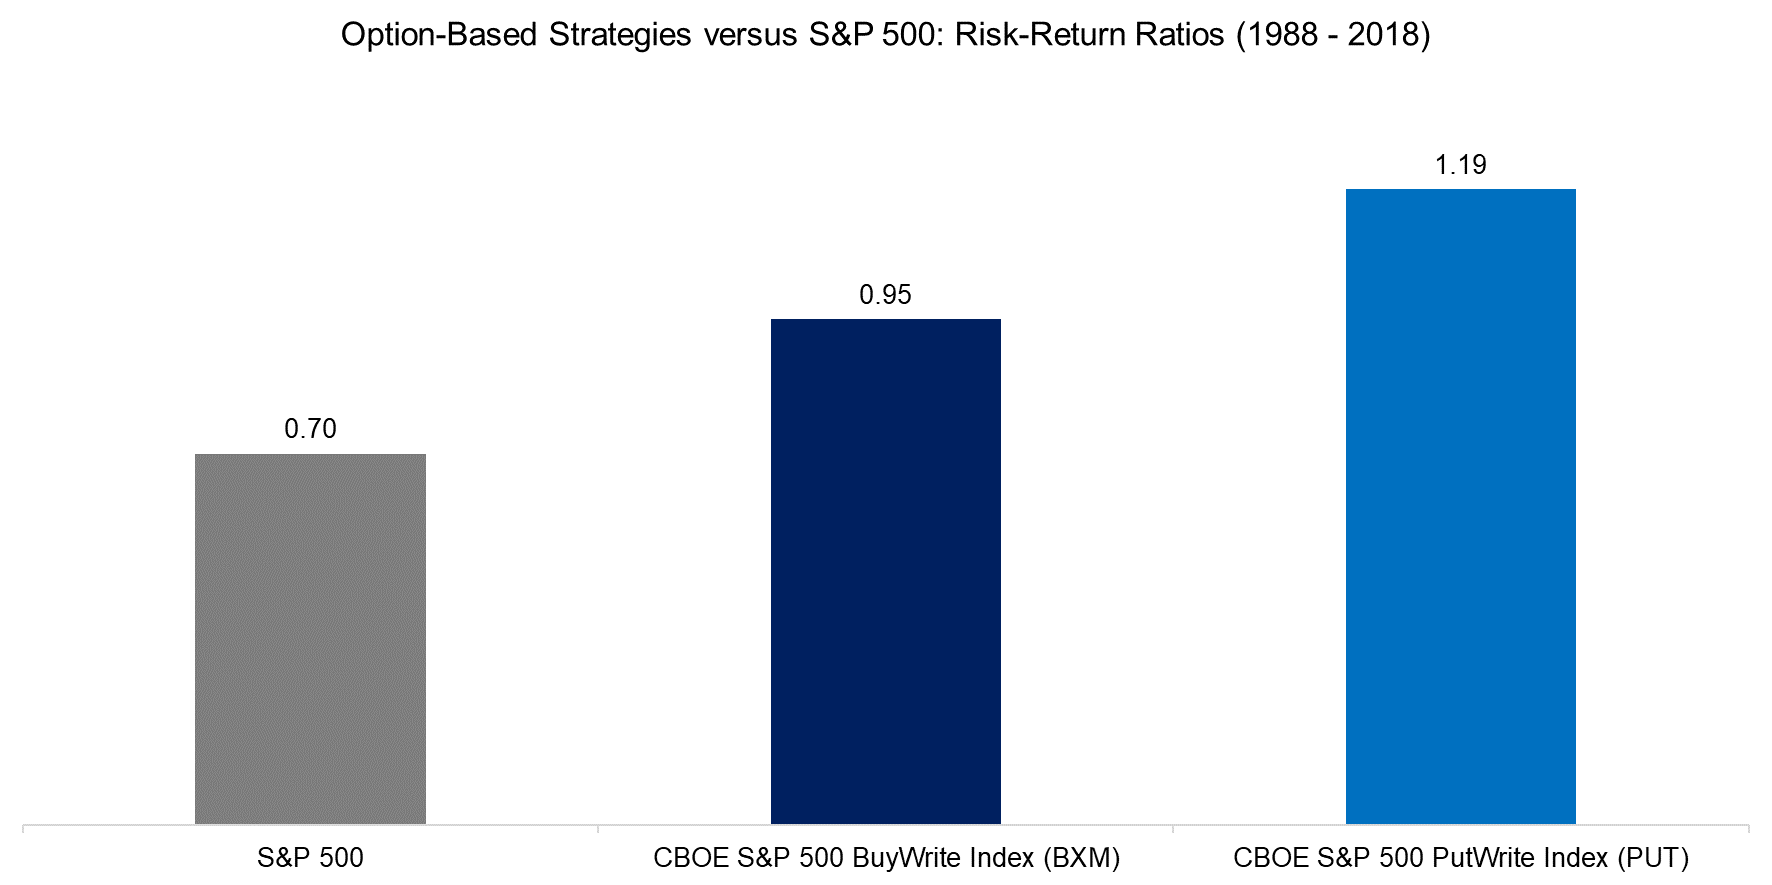 Option-Based Strategies versus S&P 500 Risk-Return Ratios (1988 - 2018)